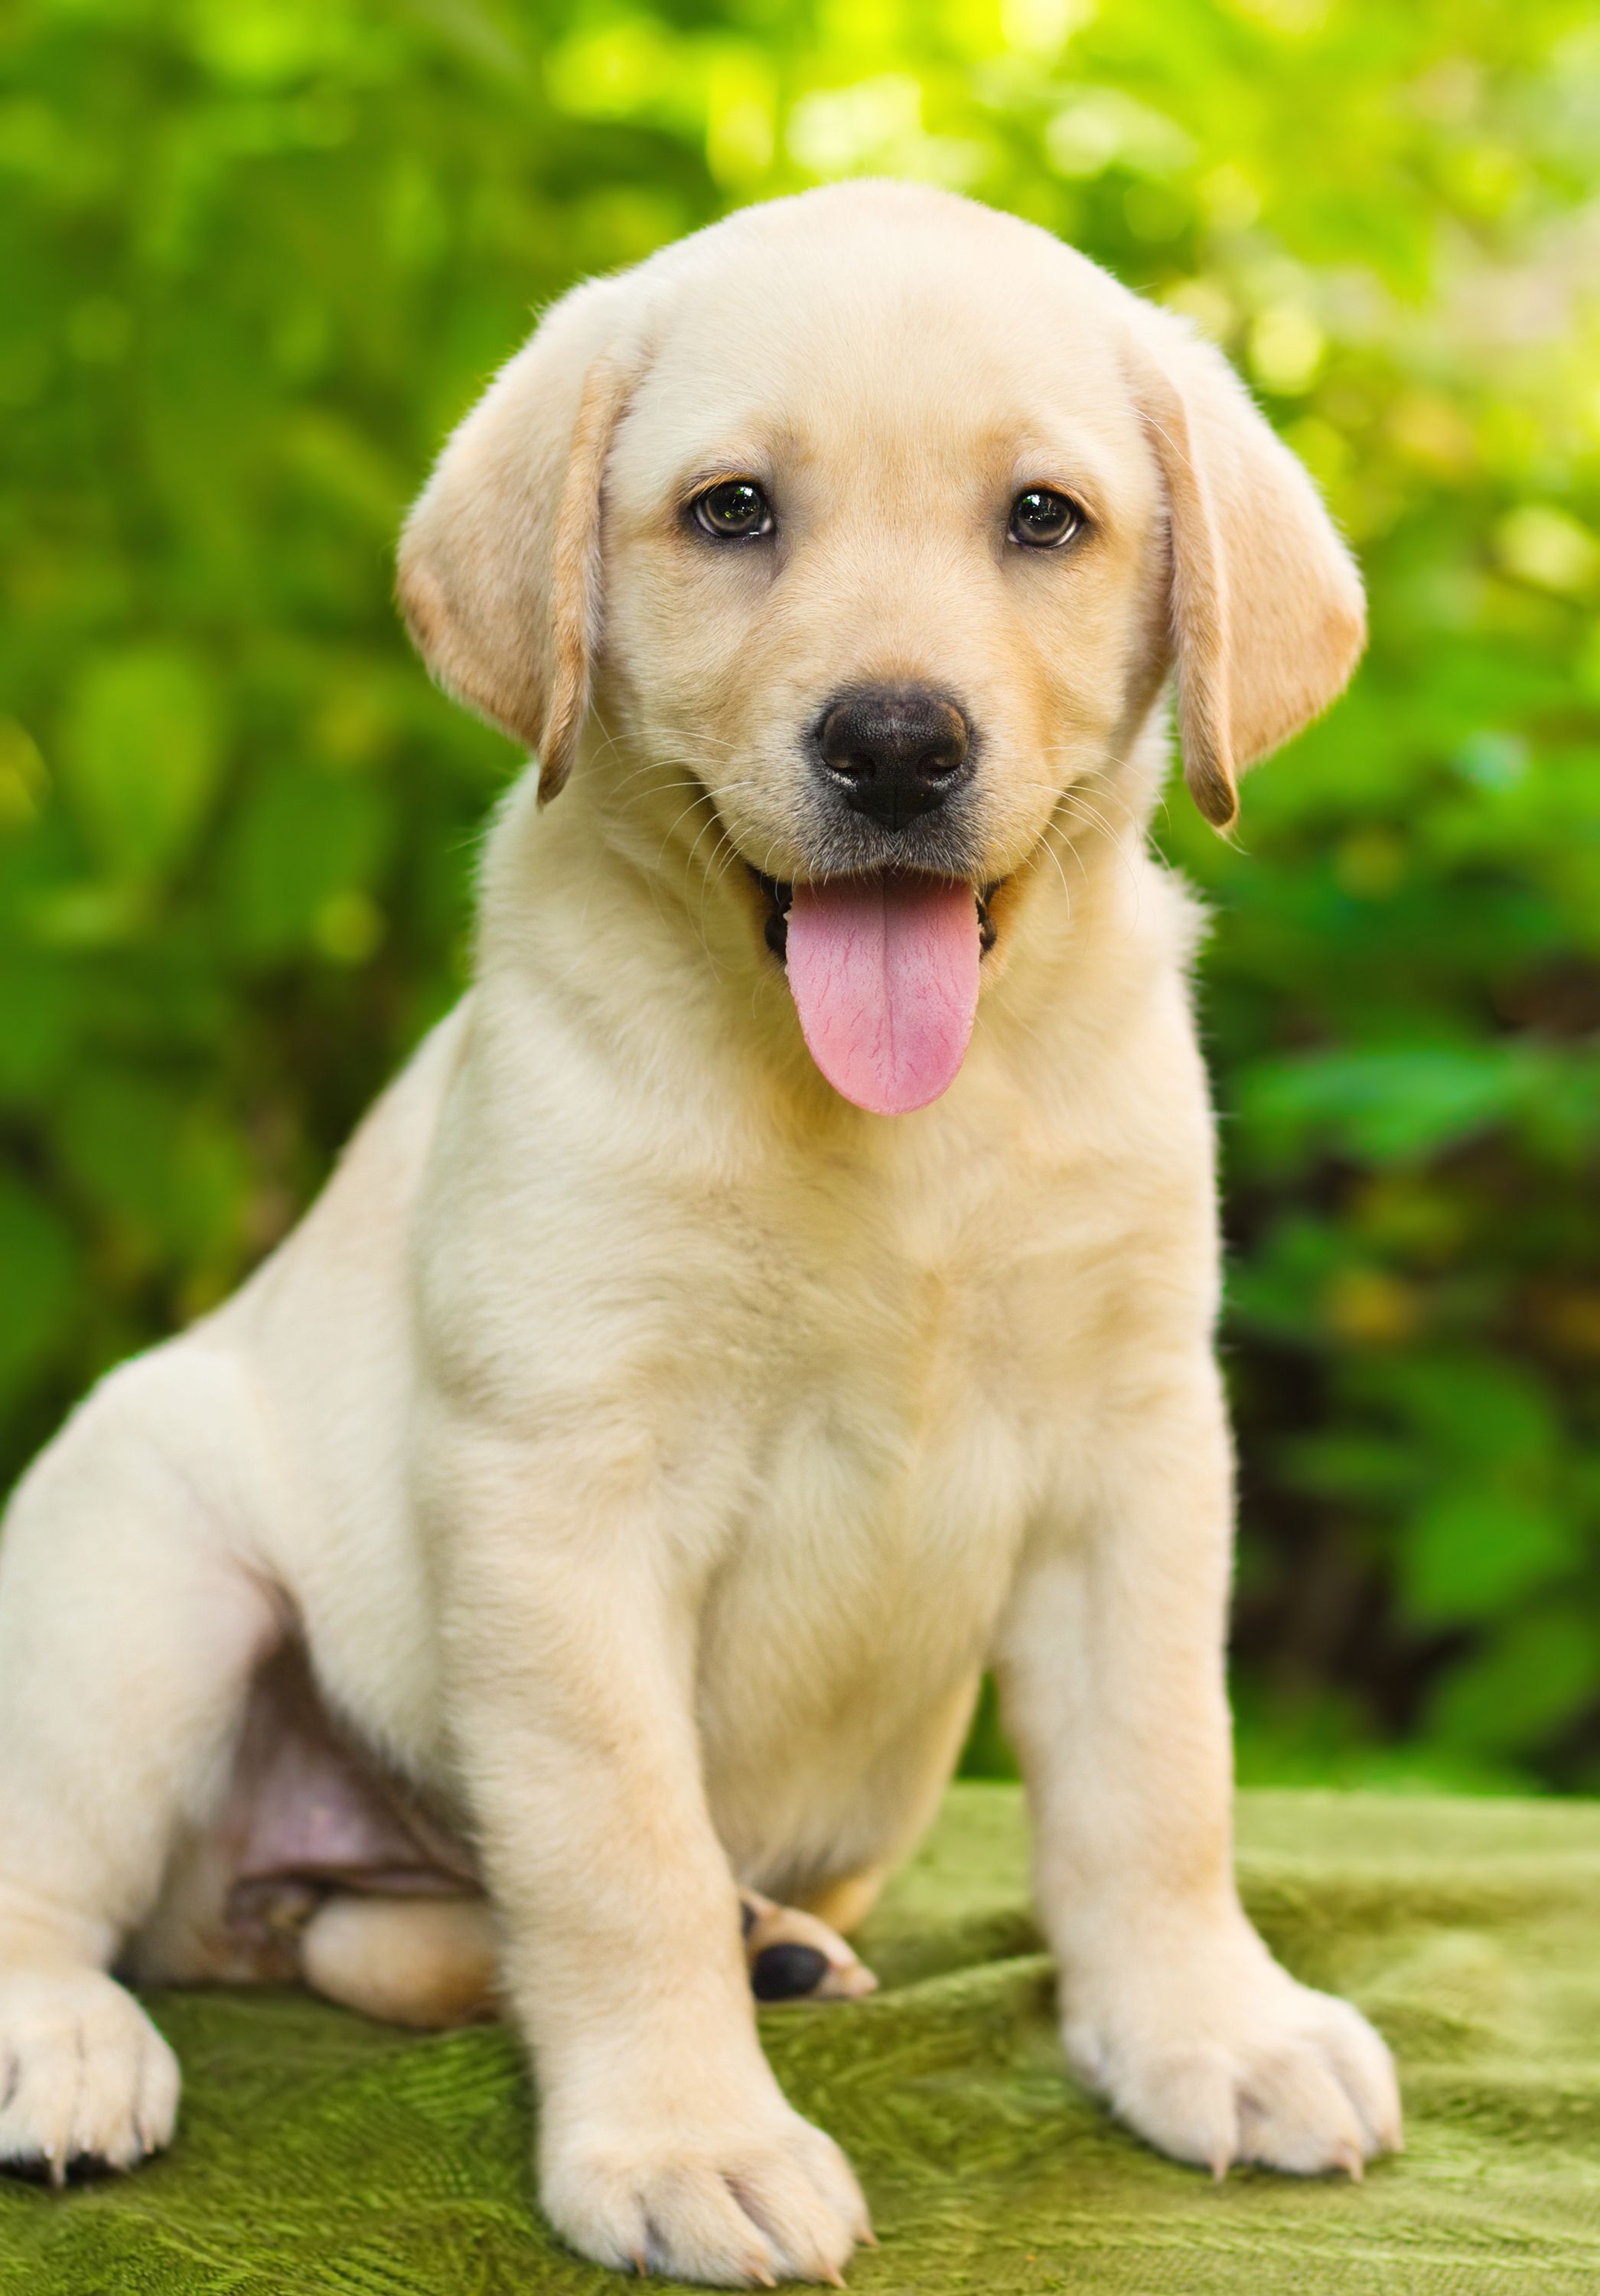 10 Surprising Facts About Labrador Retriever Dogs | Pet Health Tips ...